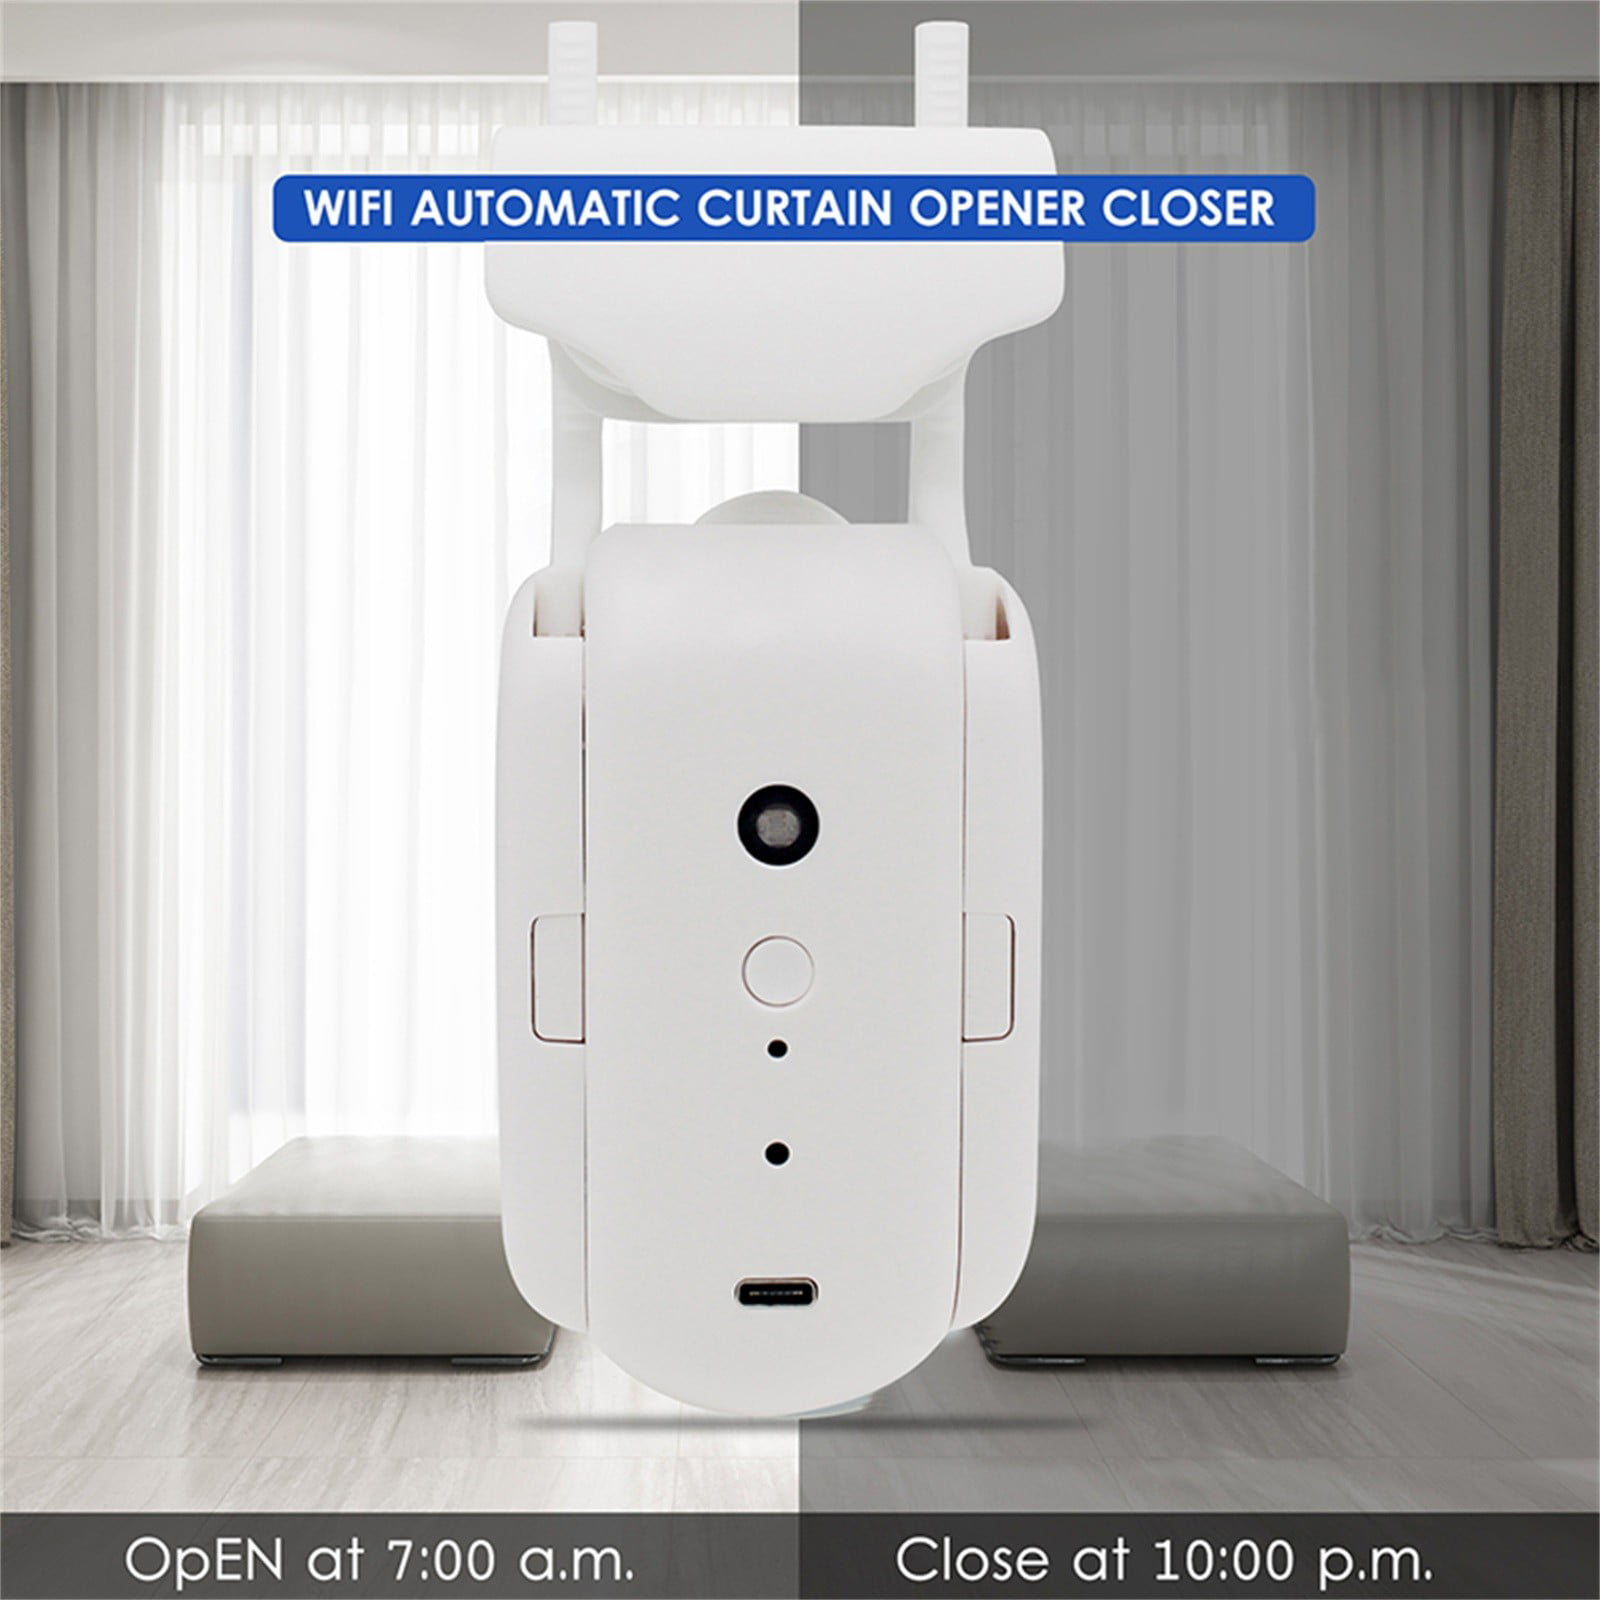 MABOTO Wifi Automatic Curtain Opener Closer Robot Wireless Smart